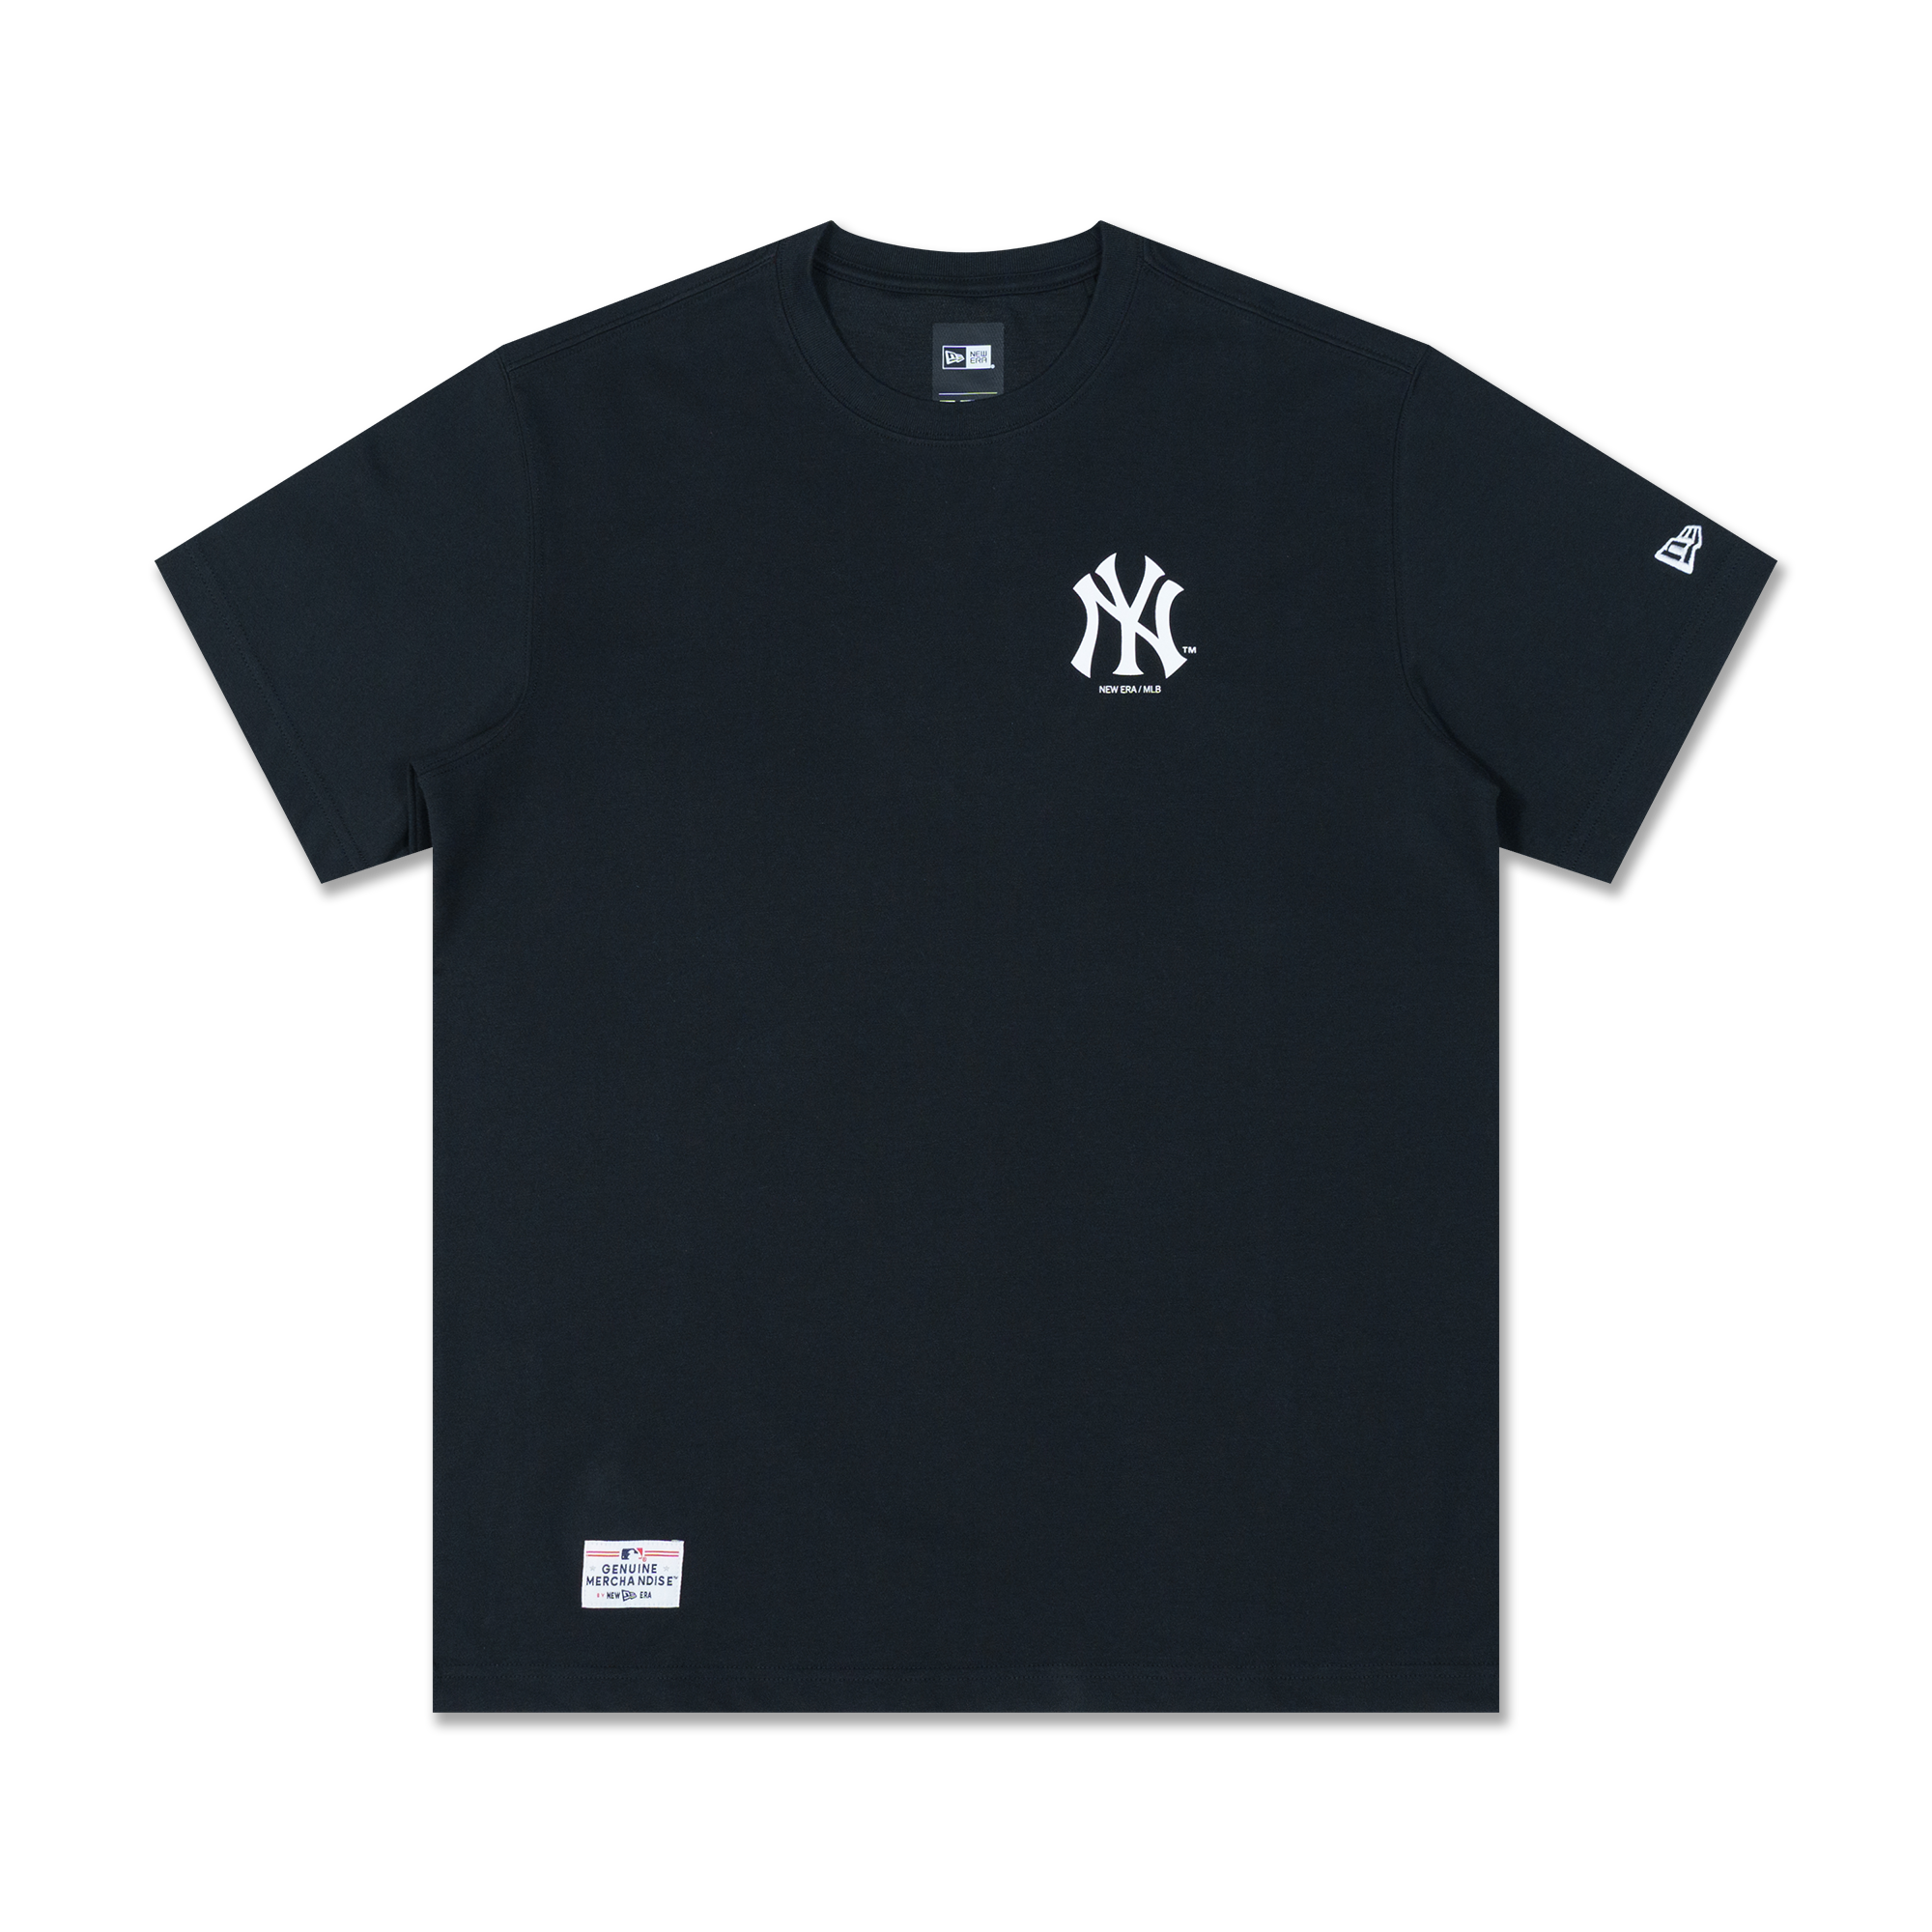 New York Yankees - Various Yankees merchandise including a grey